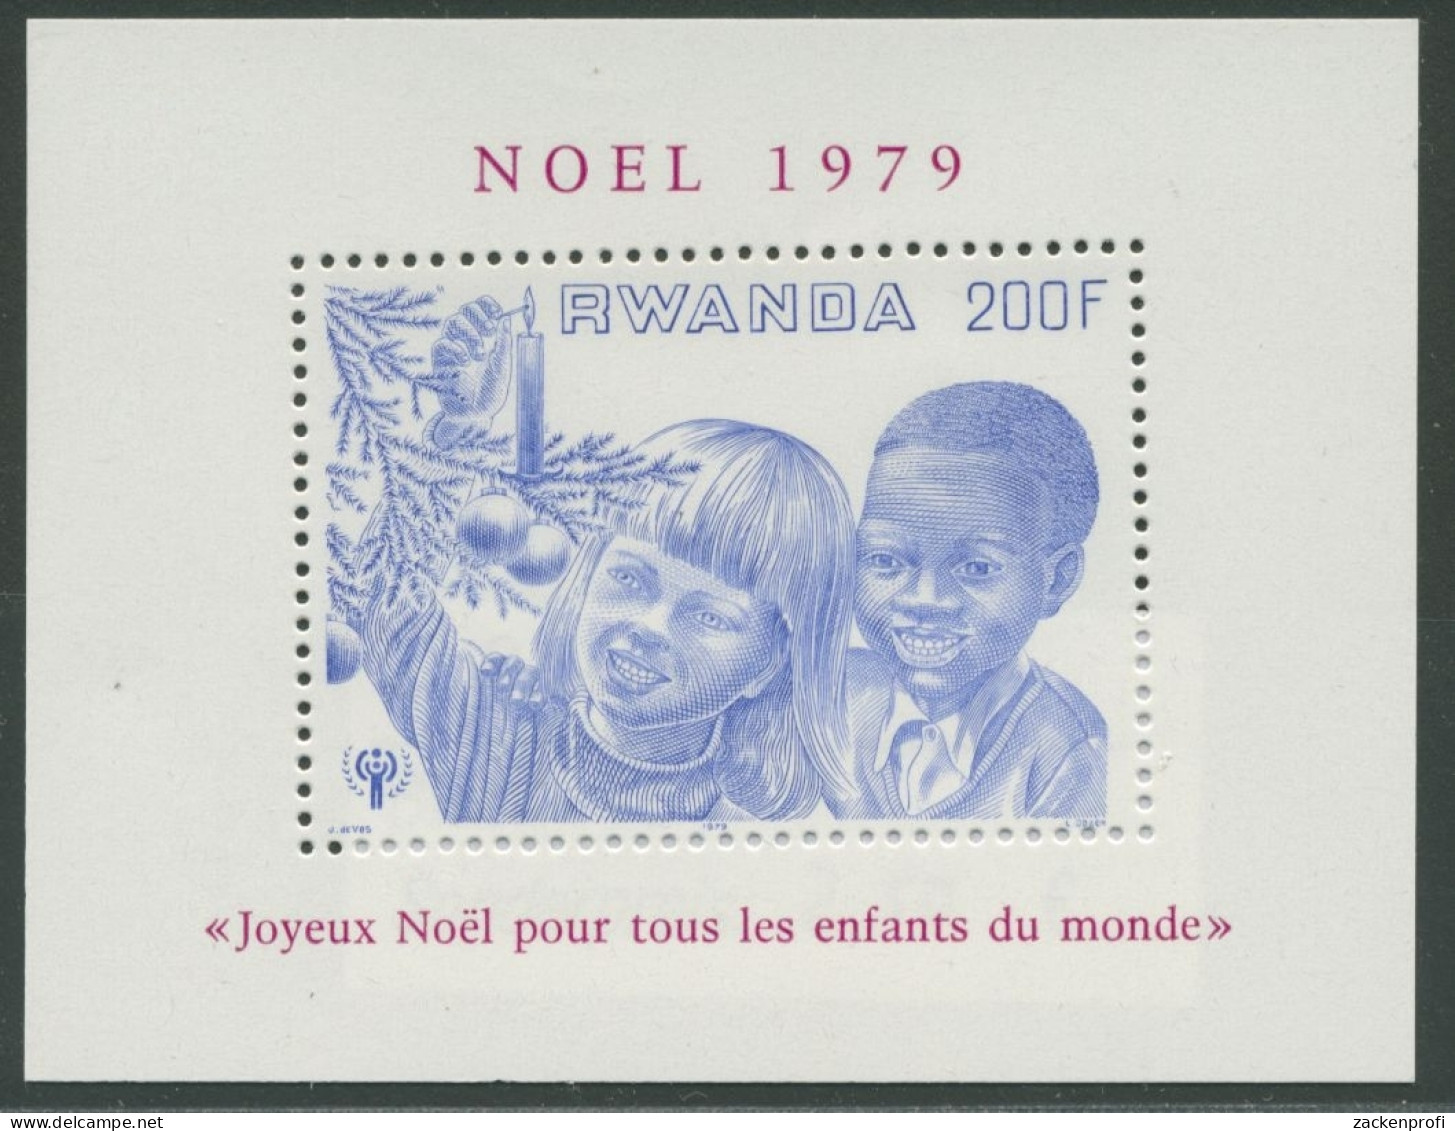 Ruanda 1979 Internationales Jahr Des Kindes Block 87 Postfrisch (C29865) - Ongebruikt